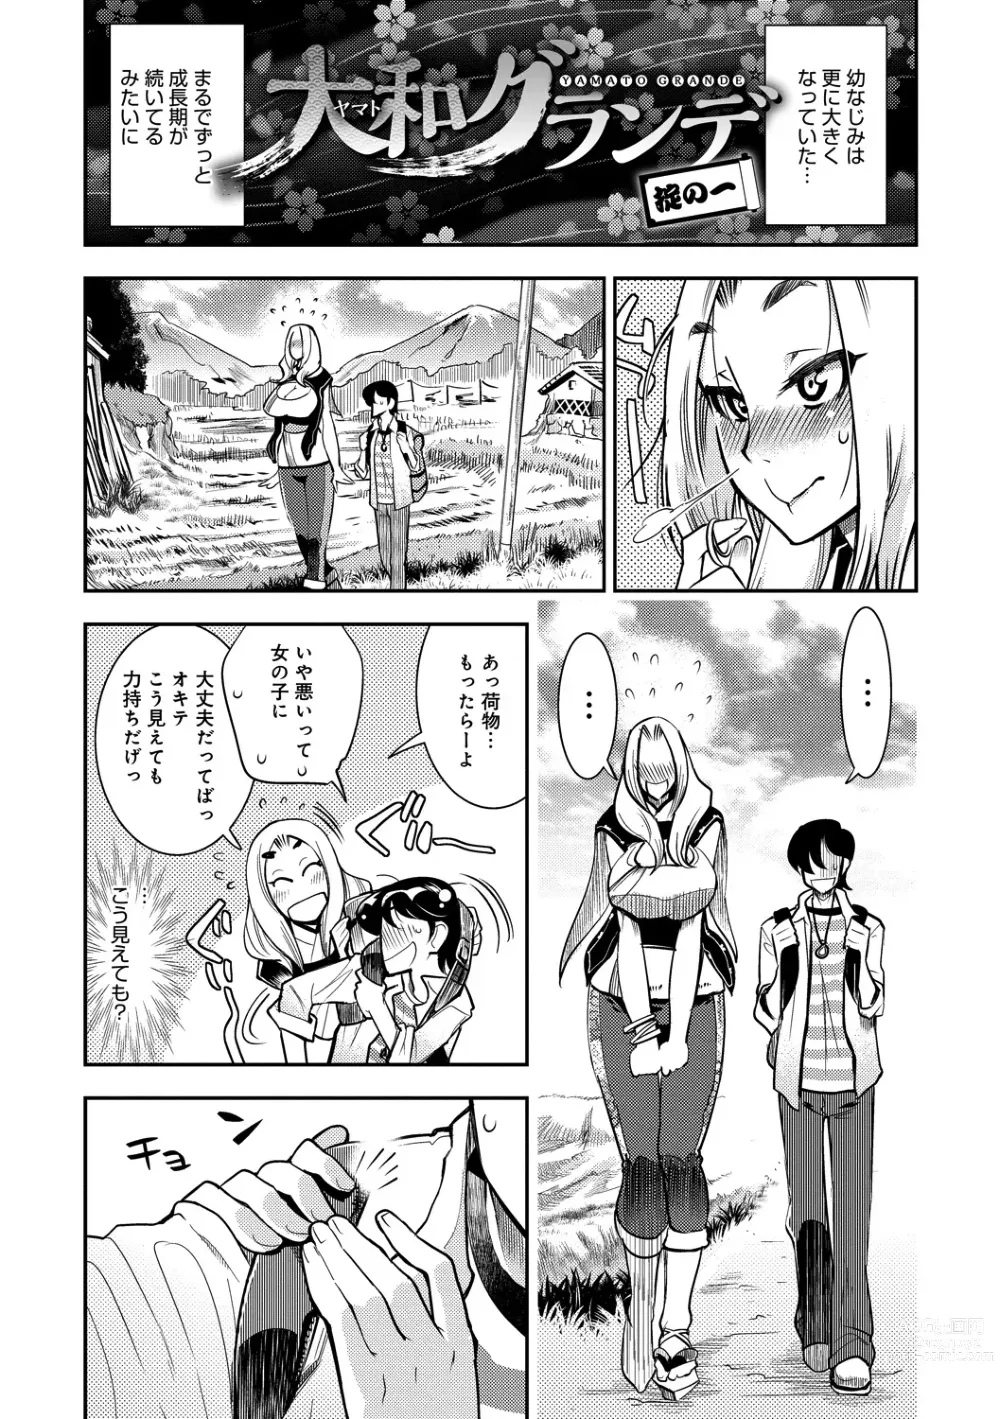 Page 7 of manga Hamekko 3Peace!!!